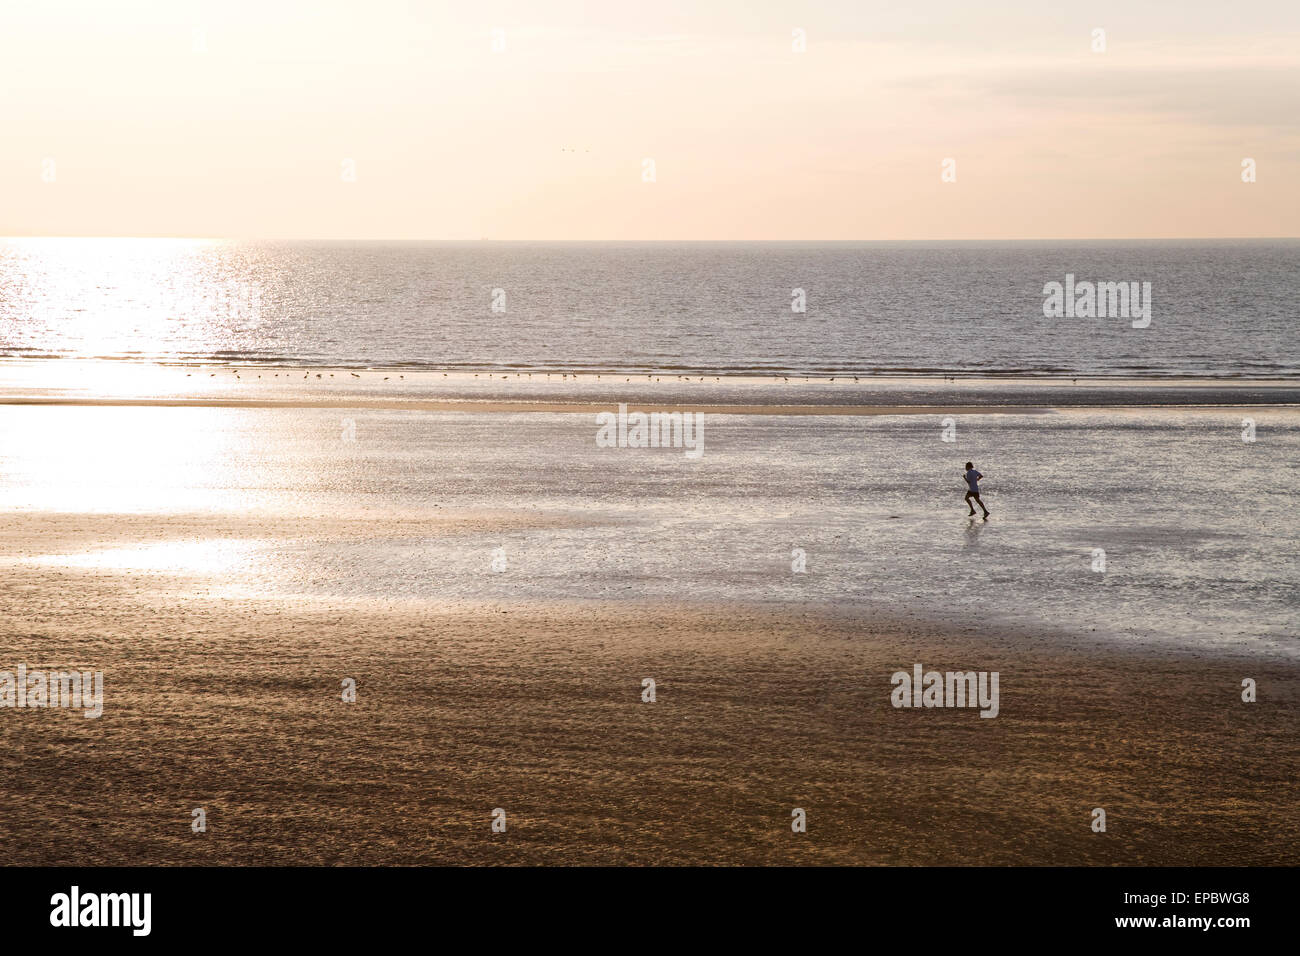 A Runner On The Beach, North Sea, Belgium Stock Photo